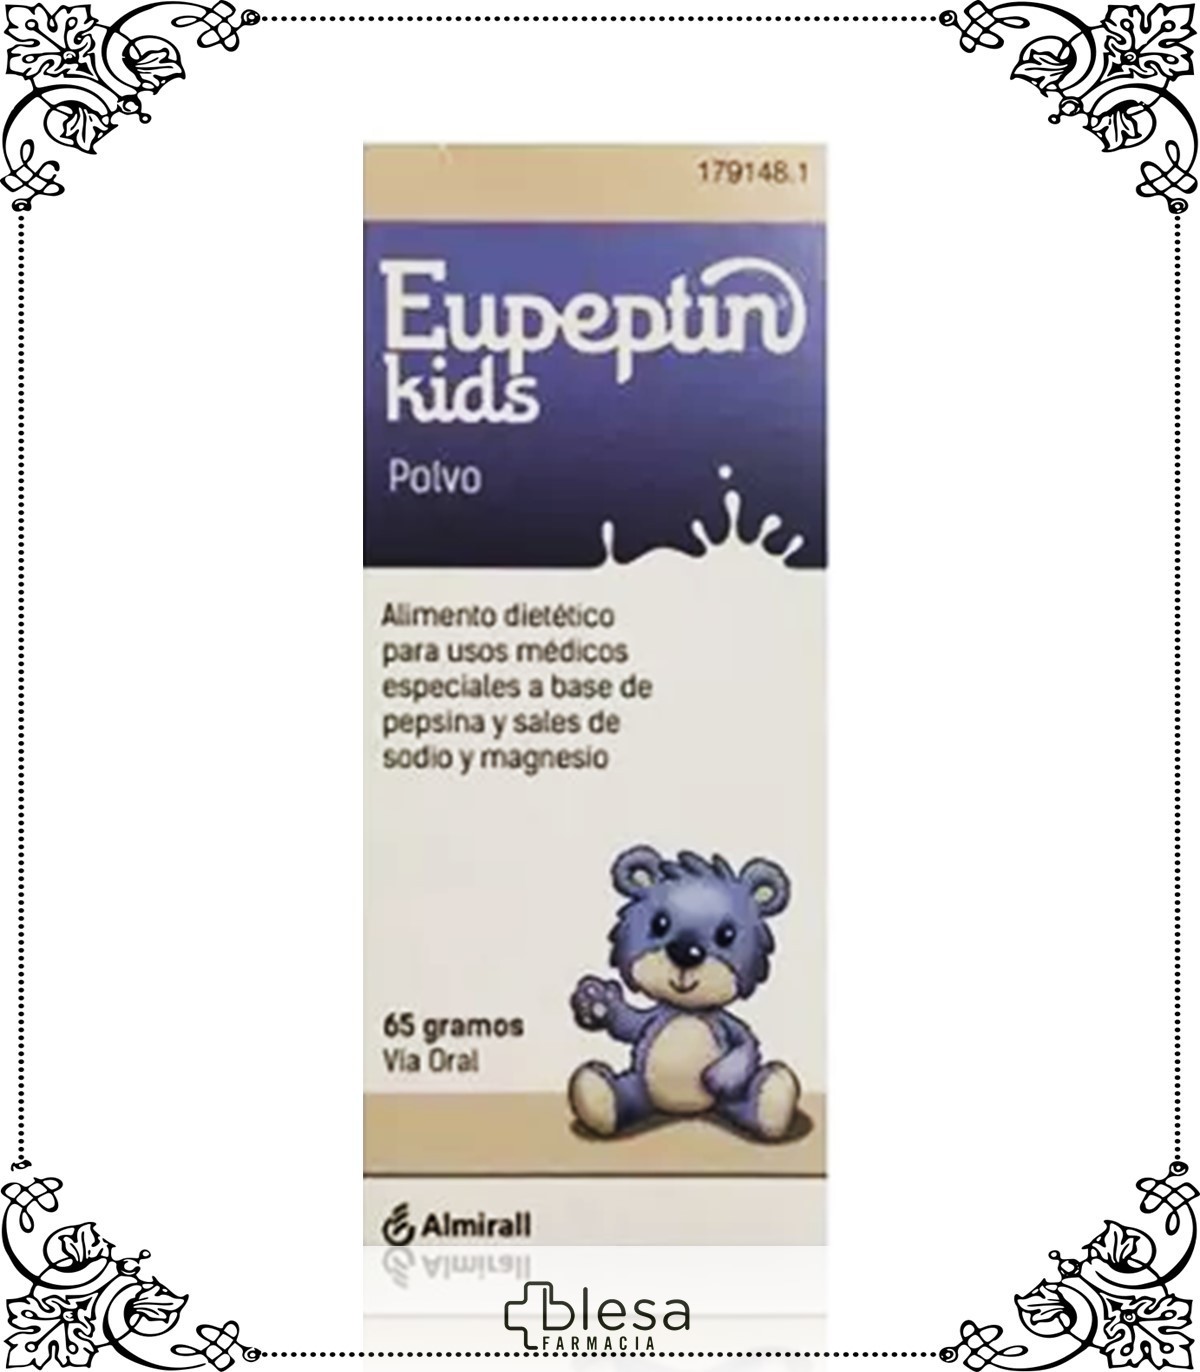 Eupeptin kids alimento dietetico en polvo